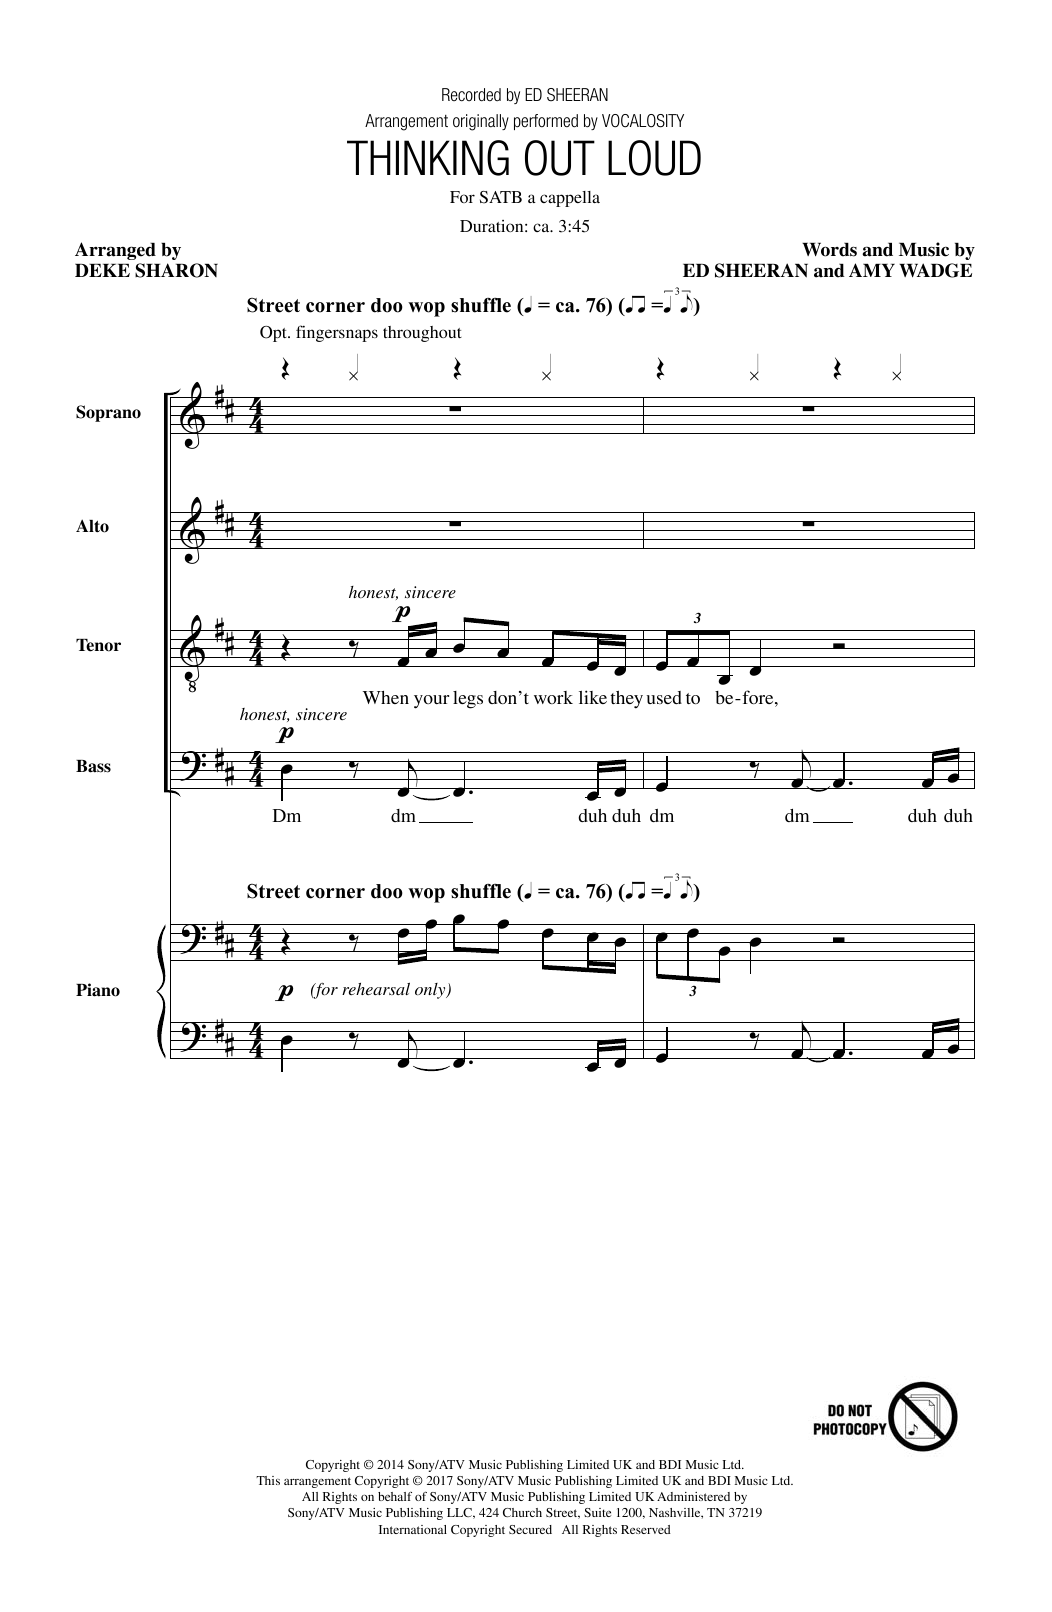 Ed Sheeran Thinking Out Loud (arr. Deke Sharon) sheet music notes and chords arranged for SATB Choir